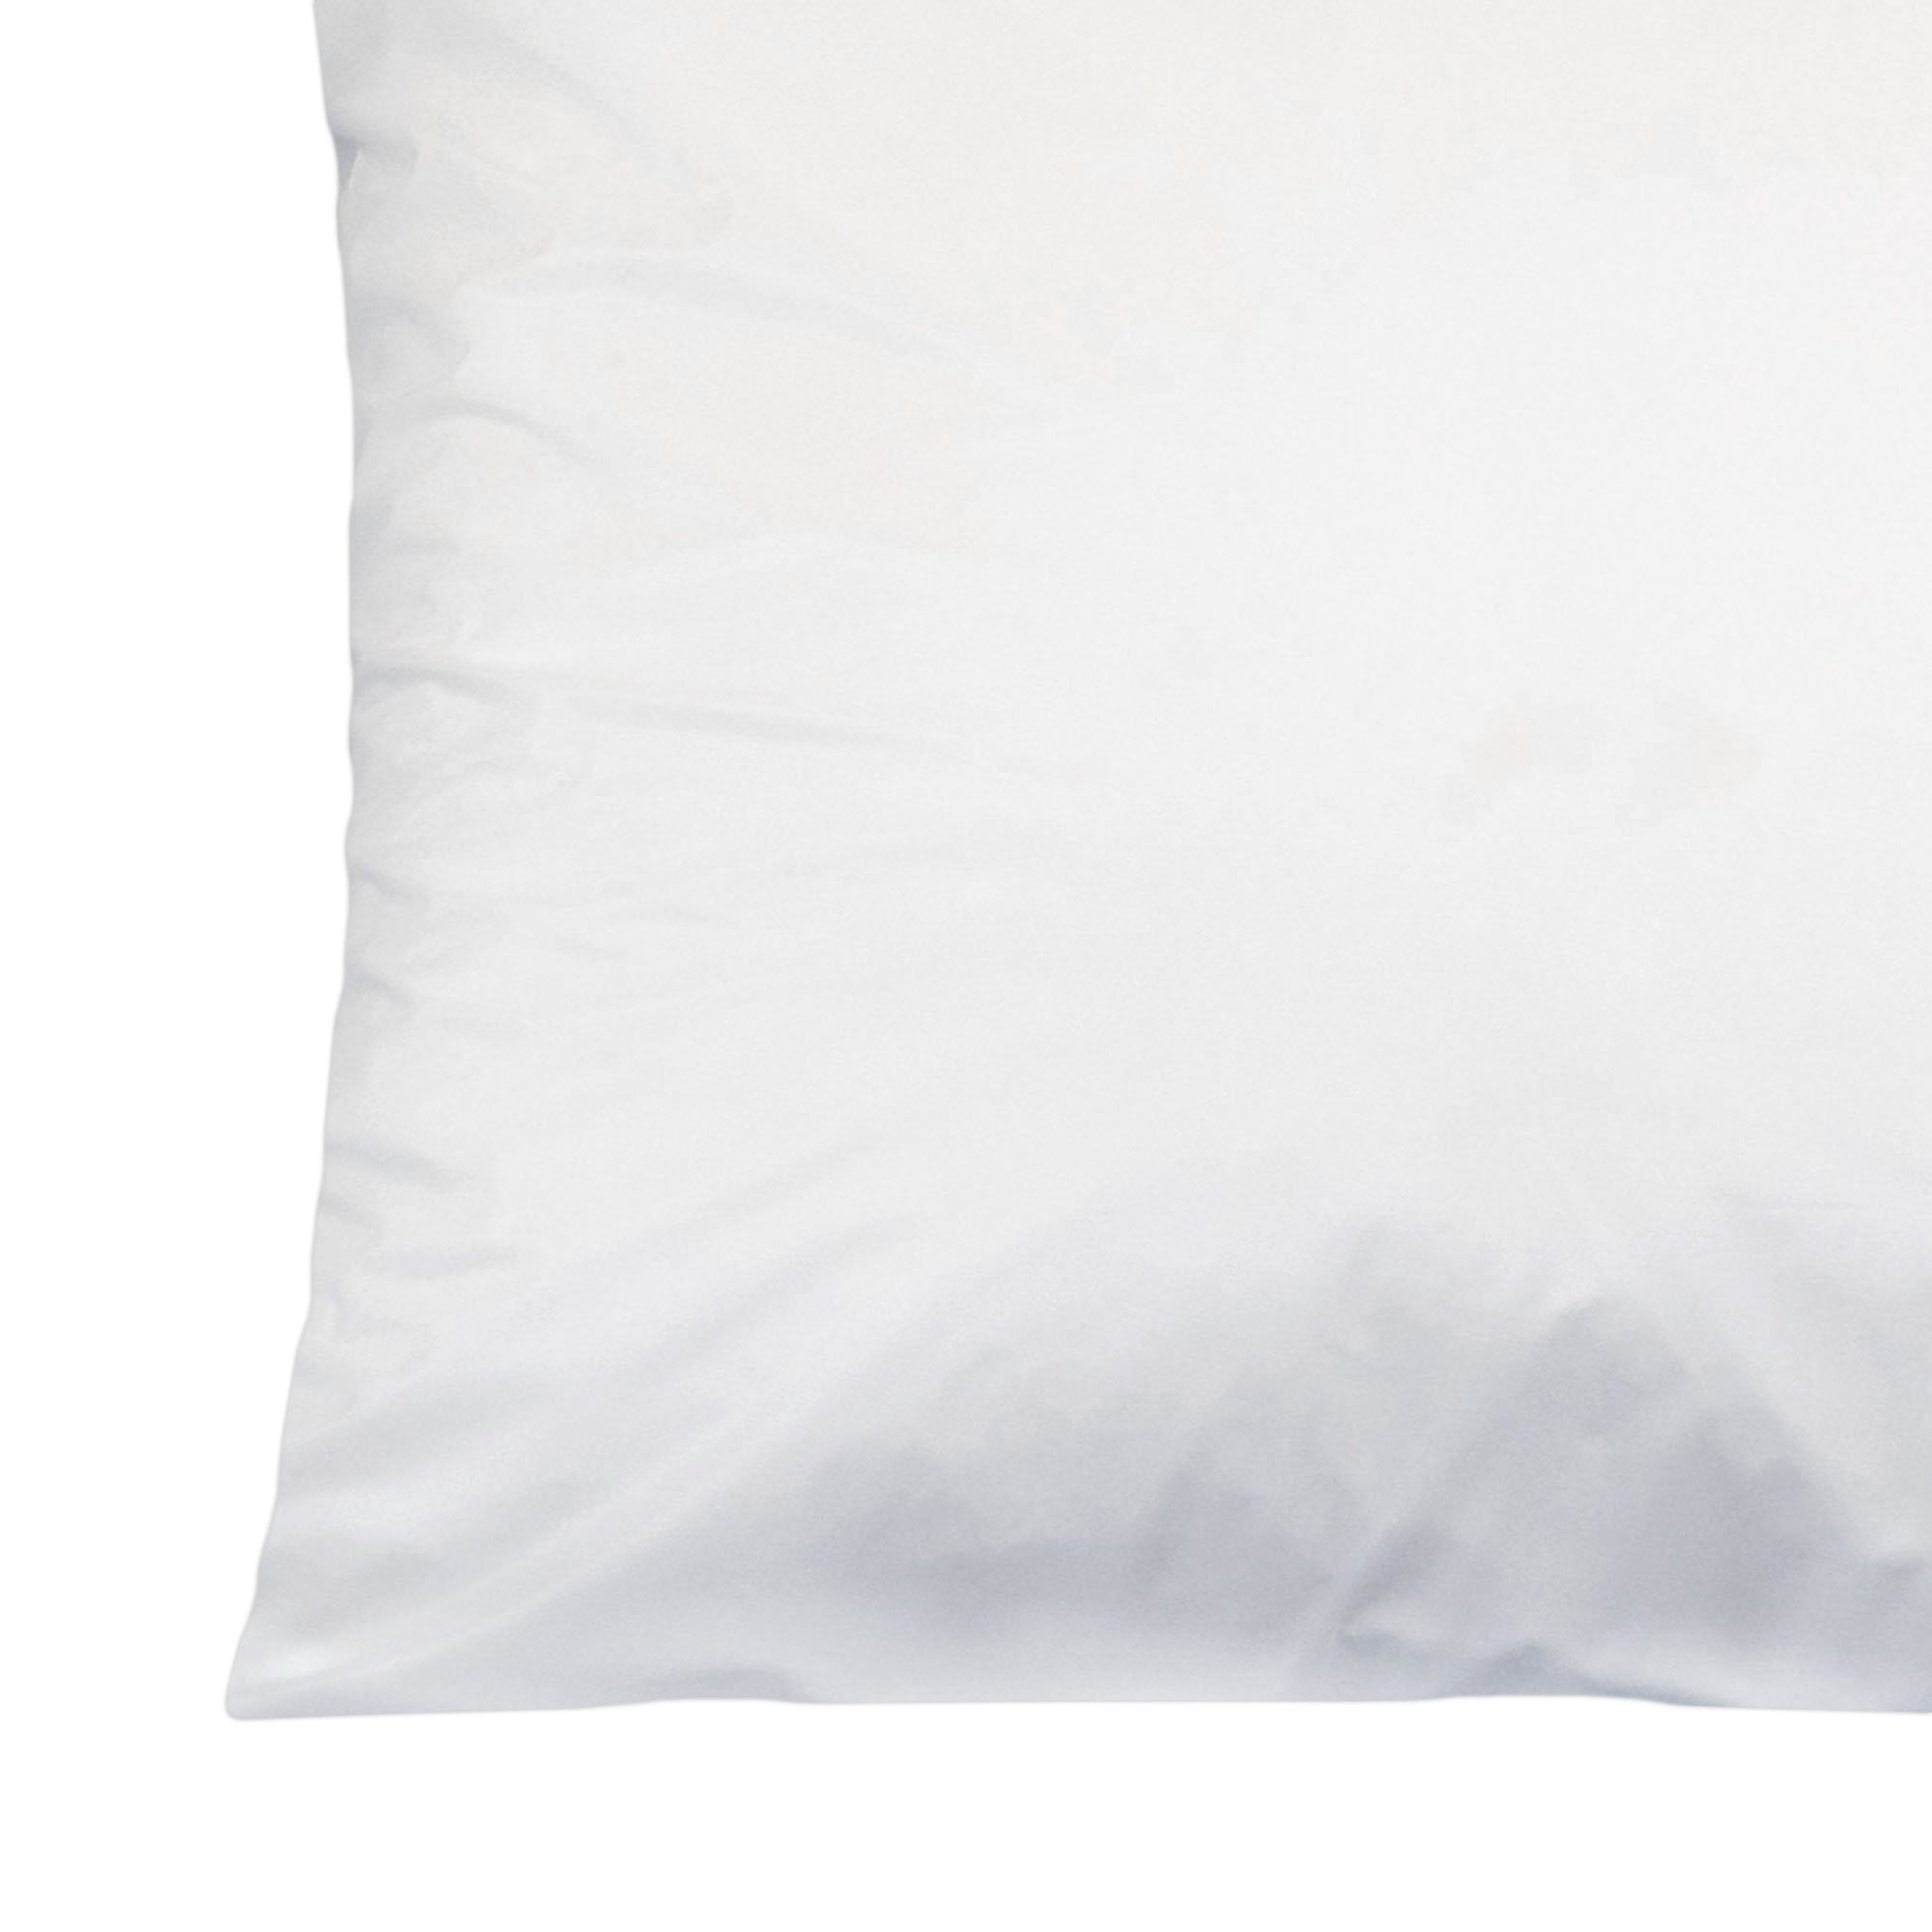 Zippered Vinyl Pillow Covers-Standard Size (Pair)